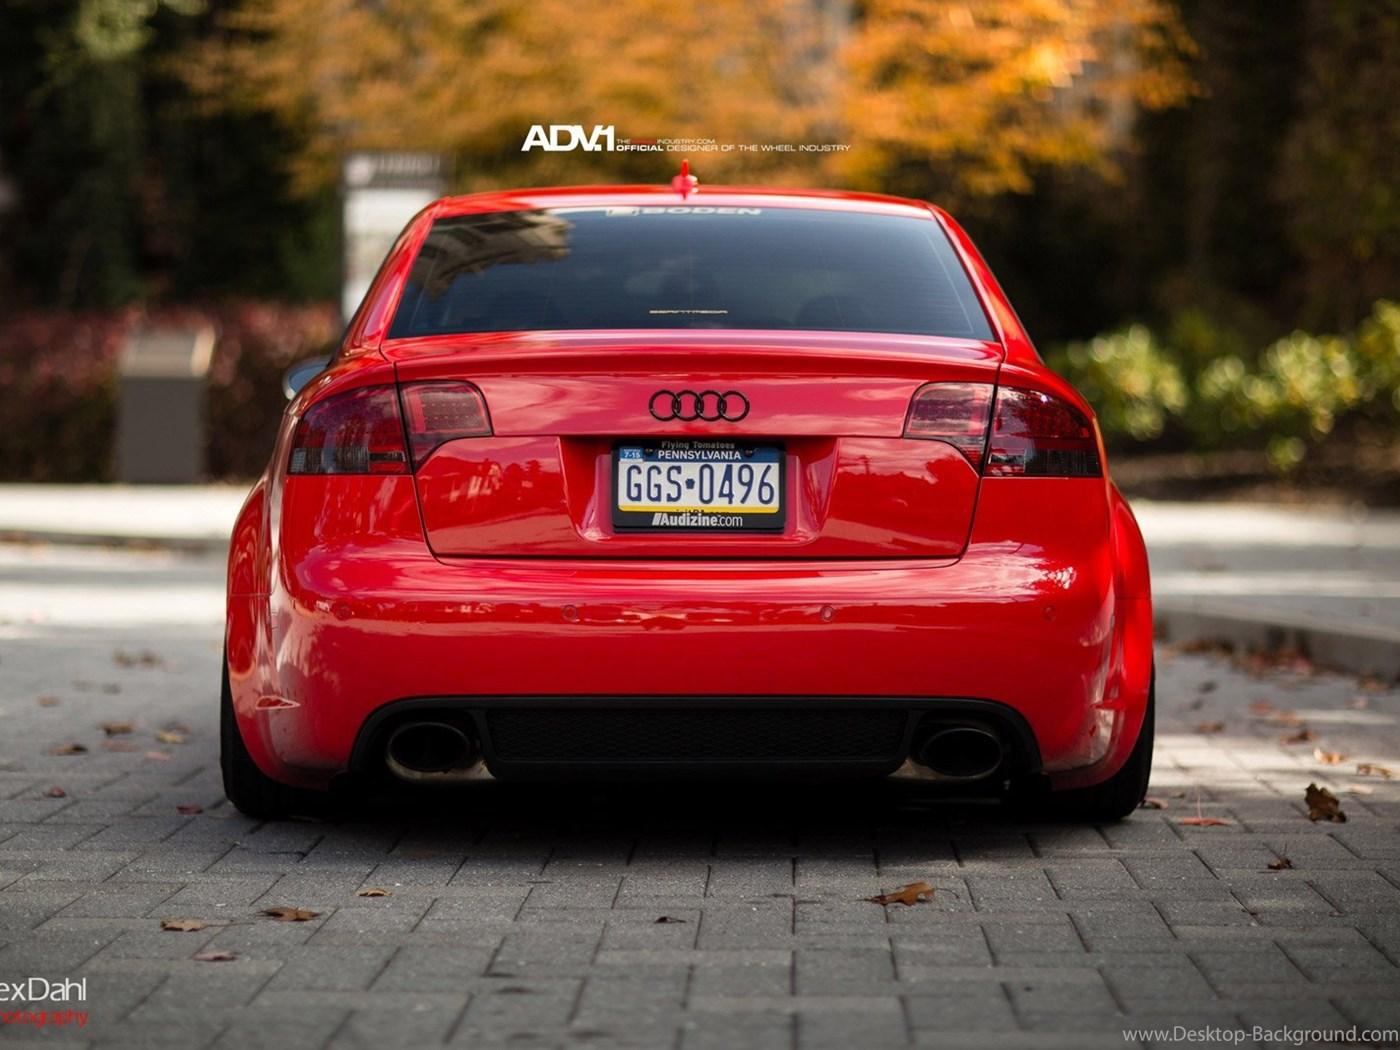 AUDI RS4 Adv1 Wheels Tuning Cars Wallpaper Desktop Background